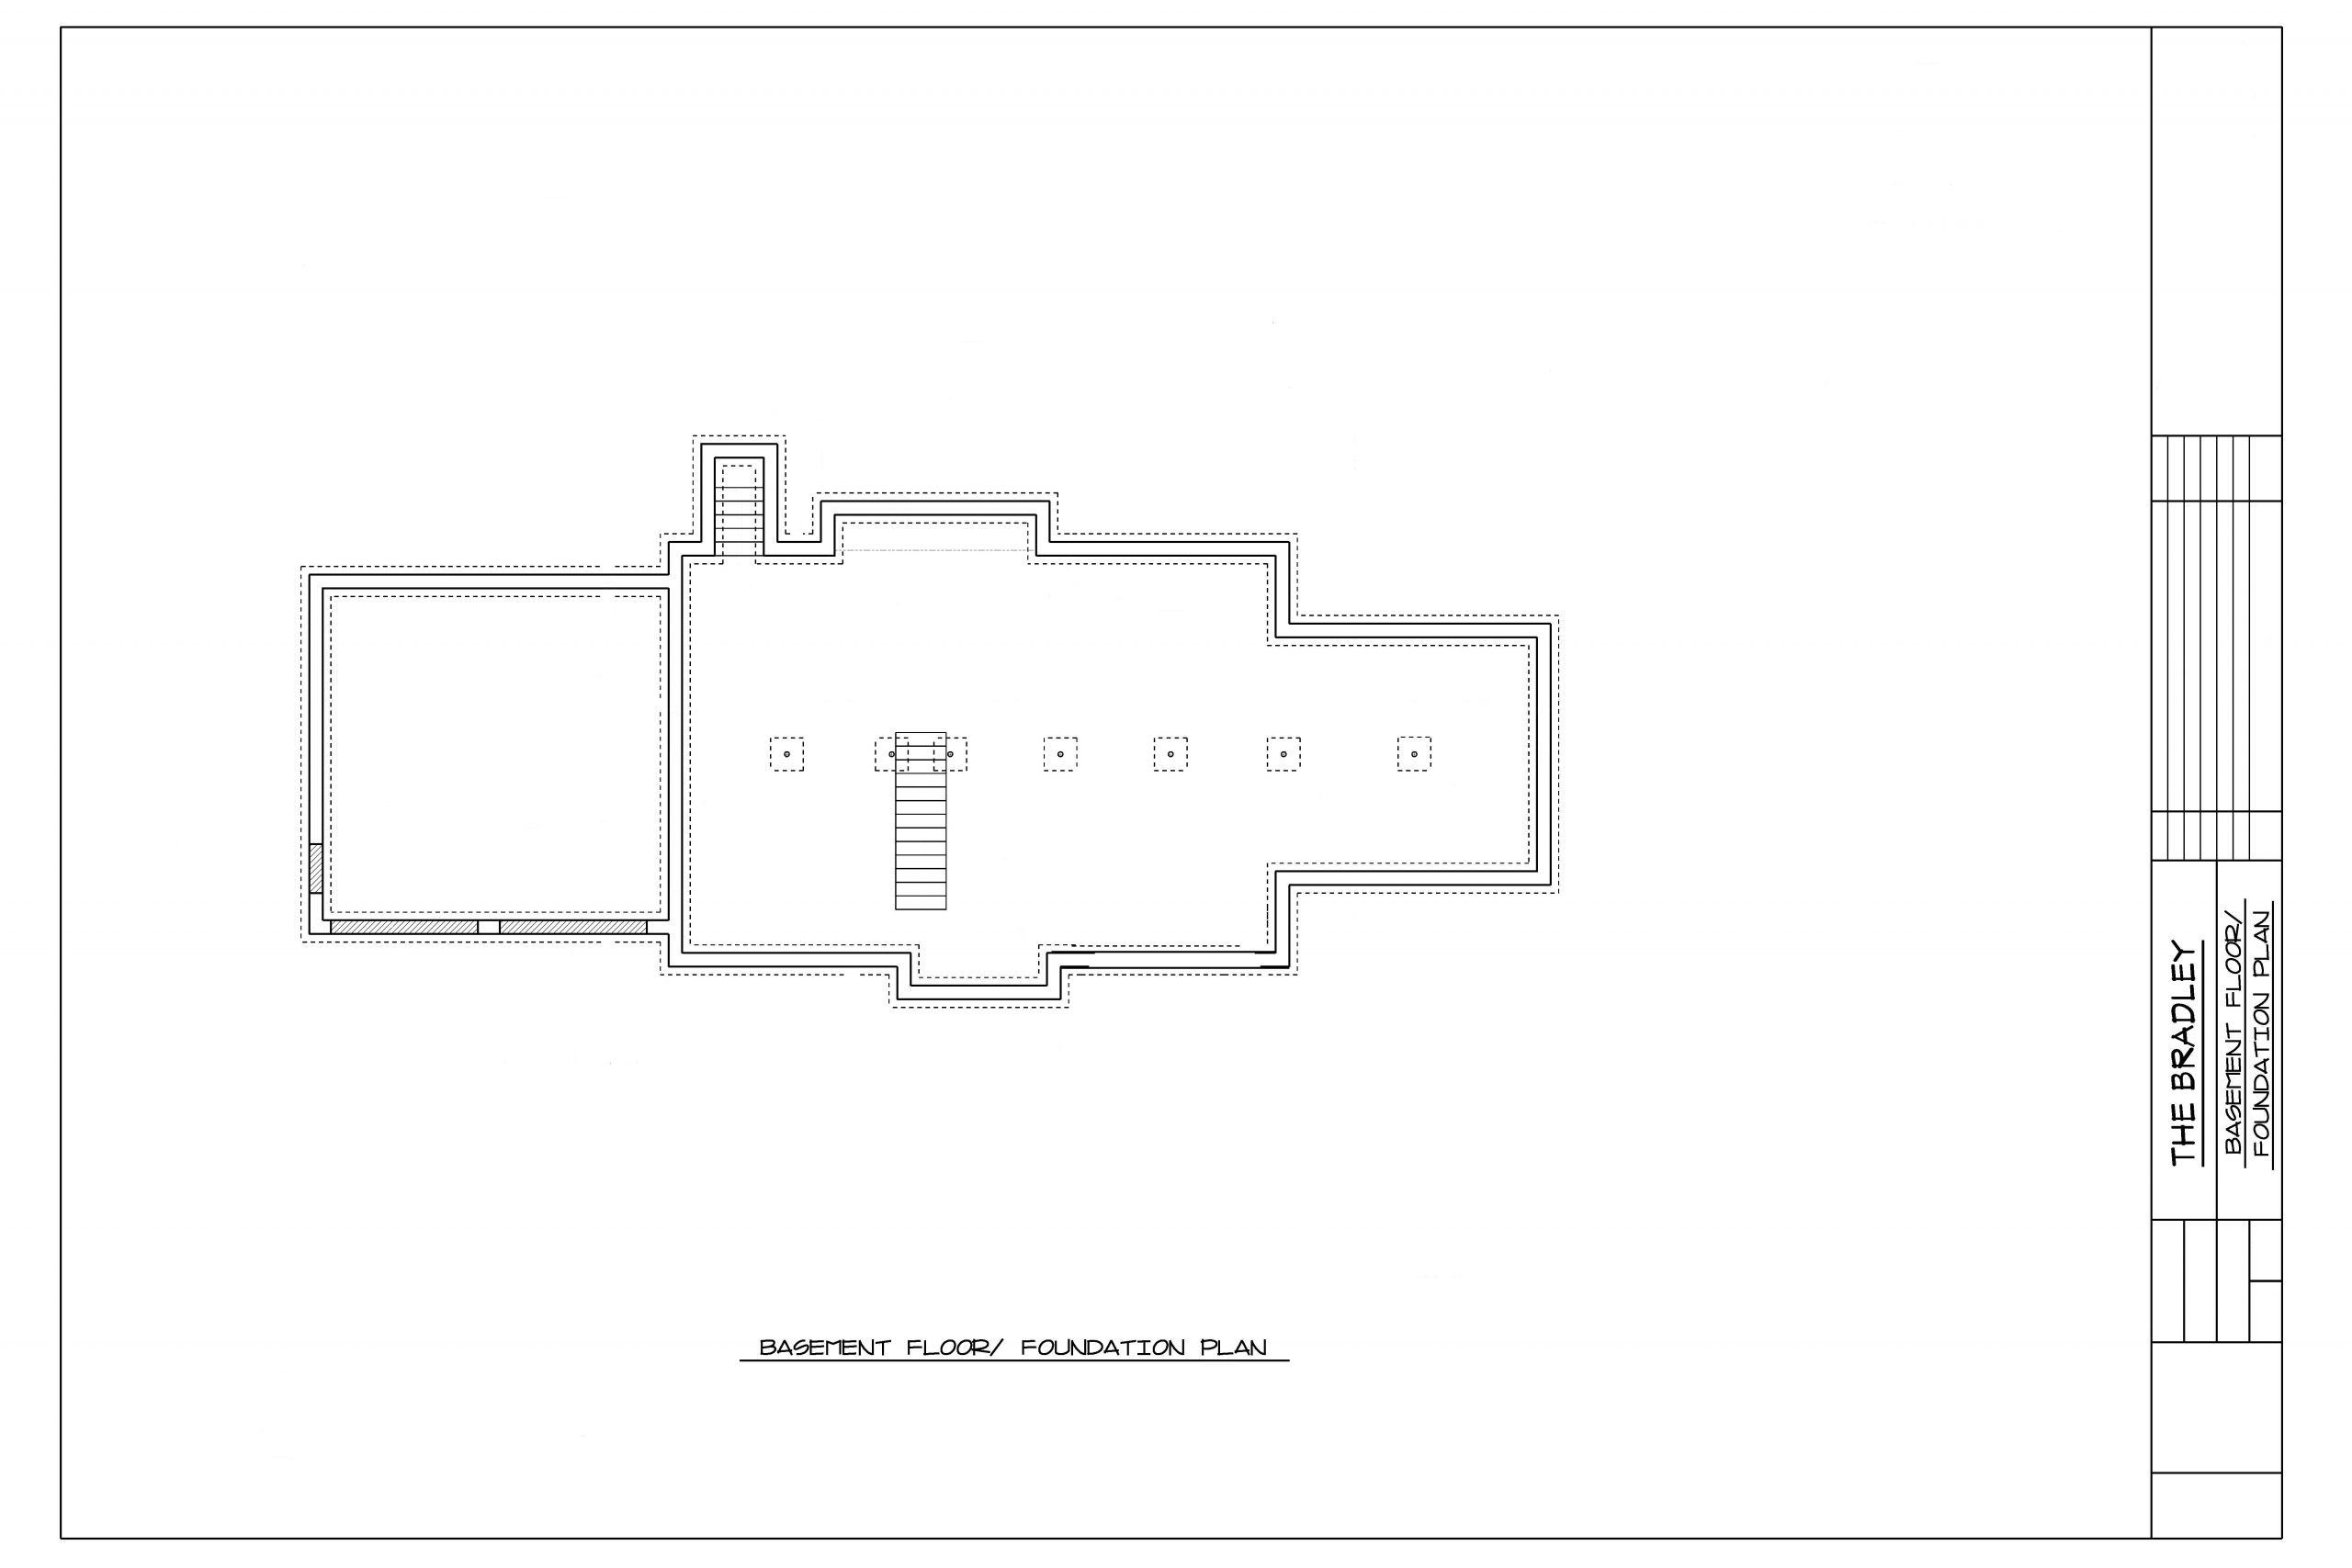 The Bradley Basement Floor Plan